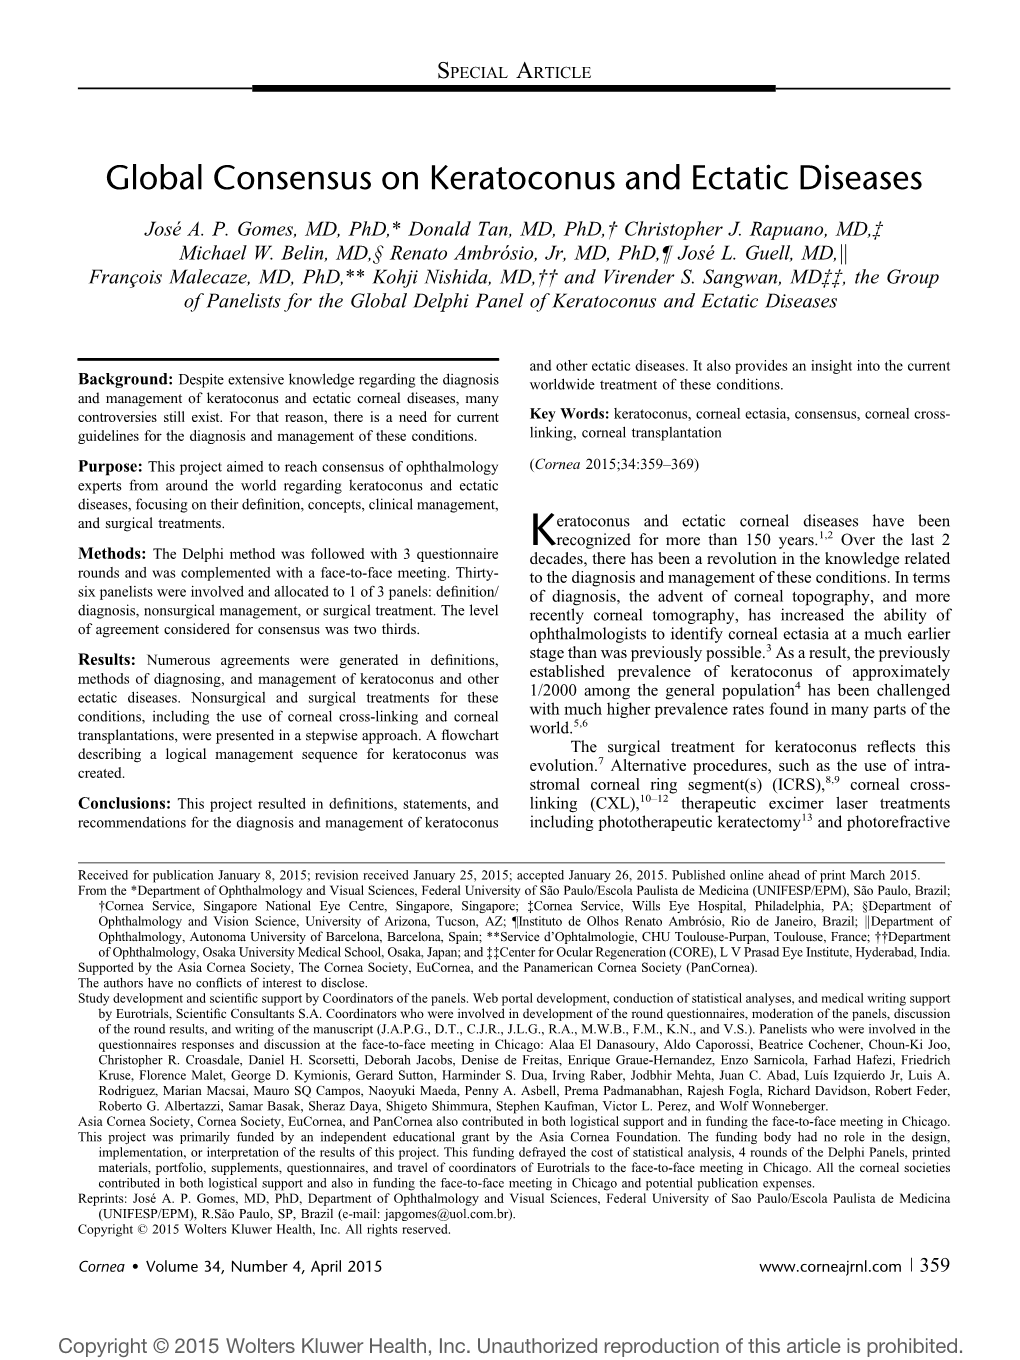 Global Consensus on Keratoconus and Ectatic Diseases